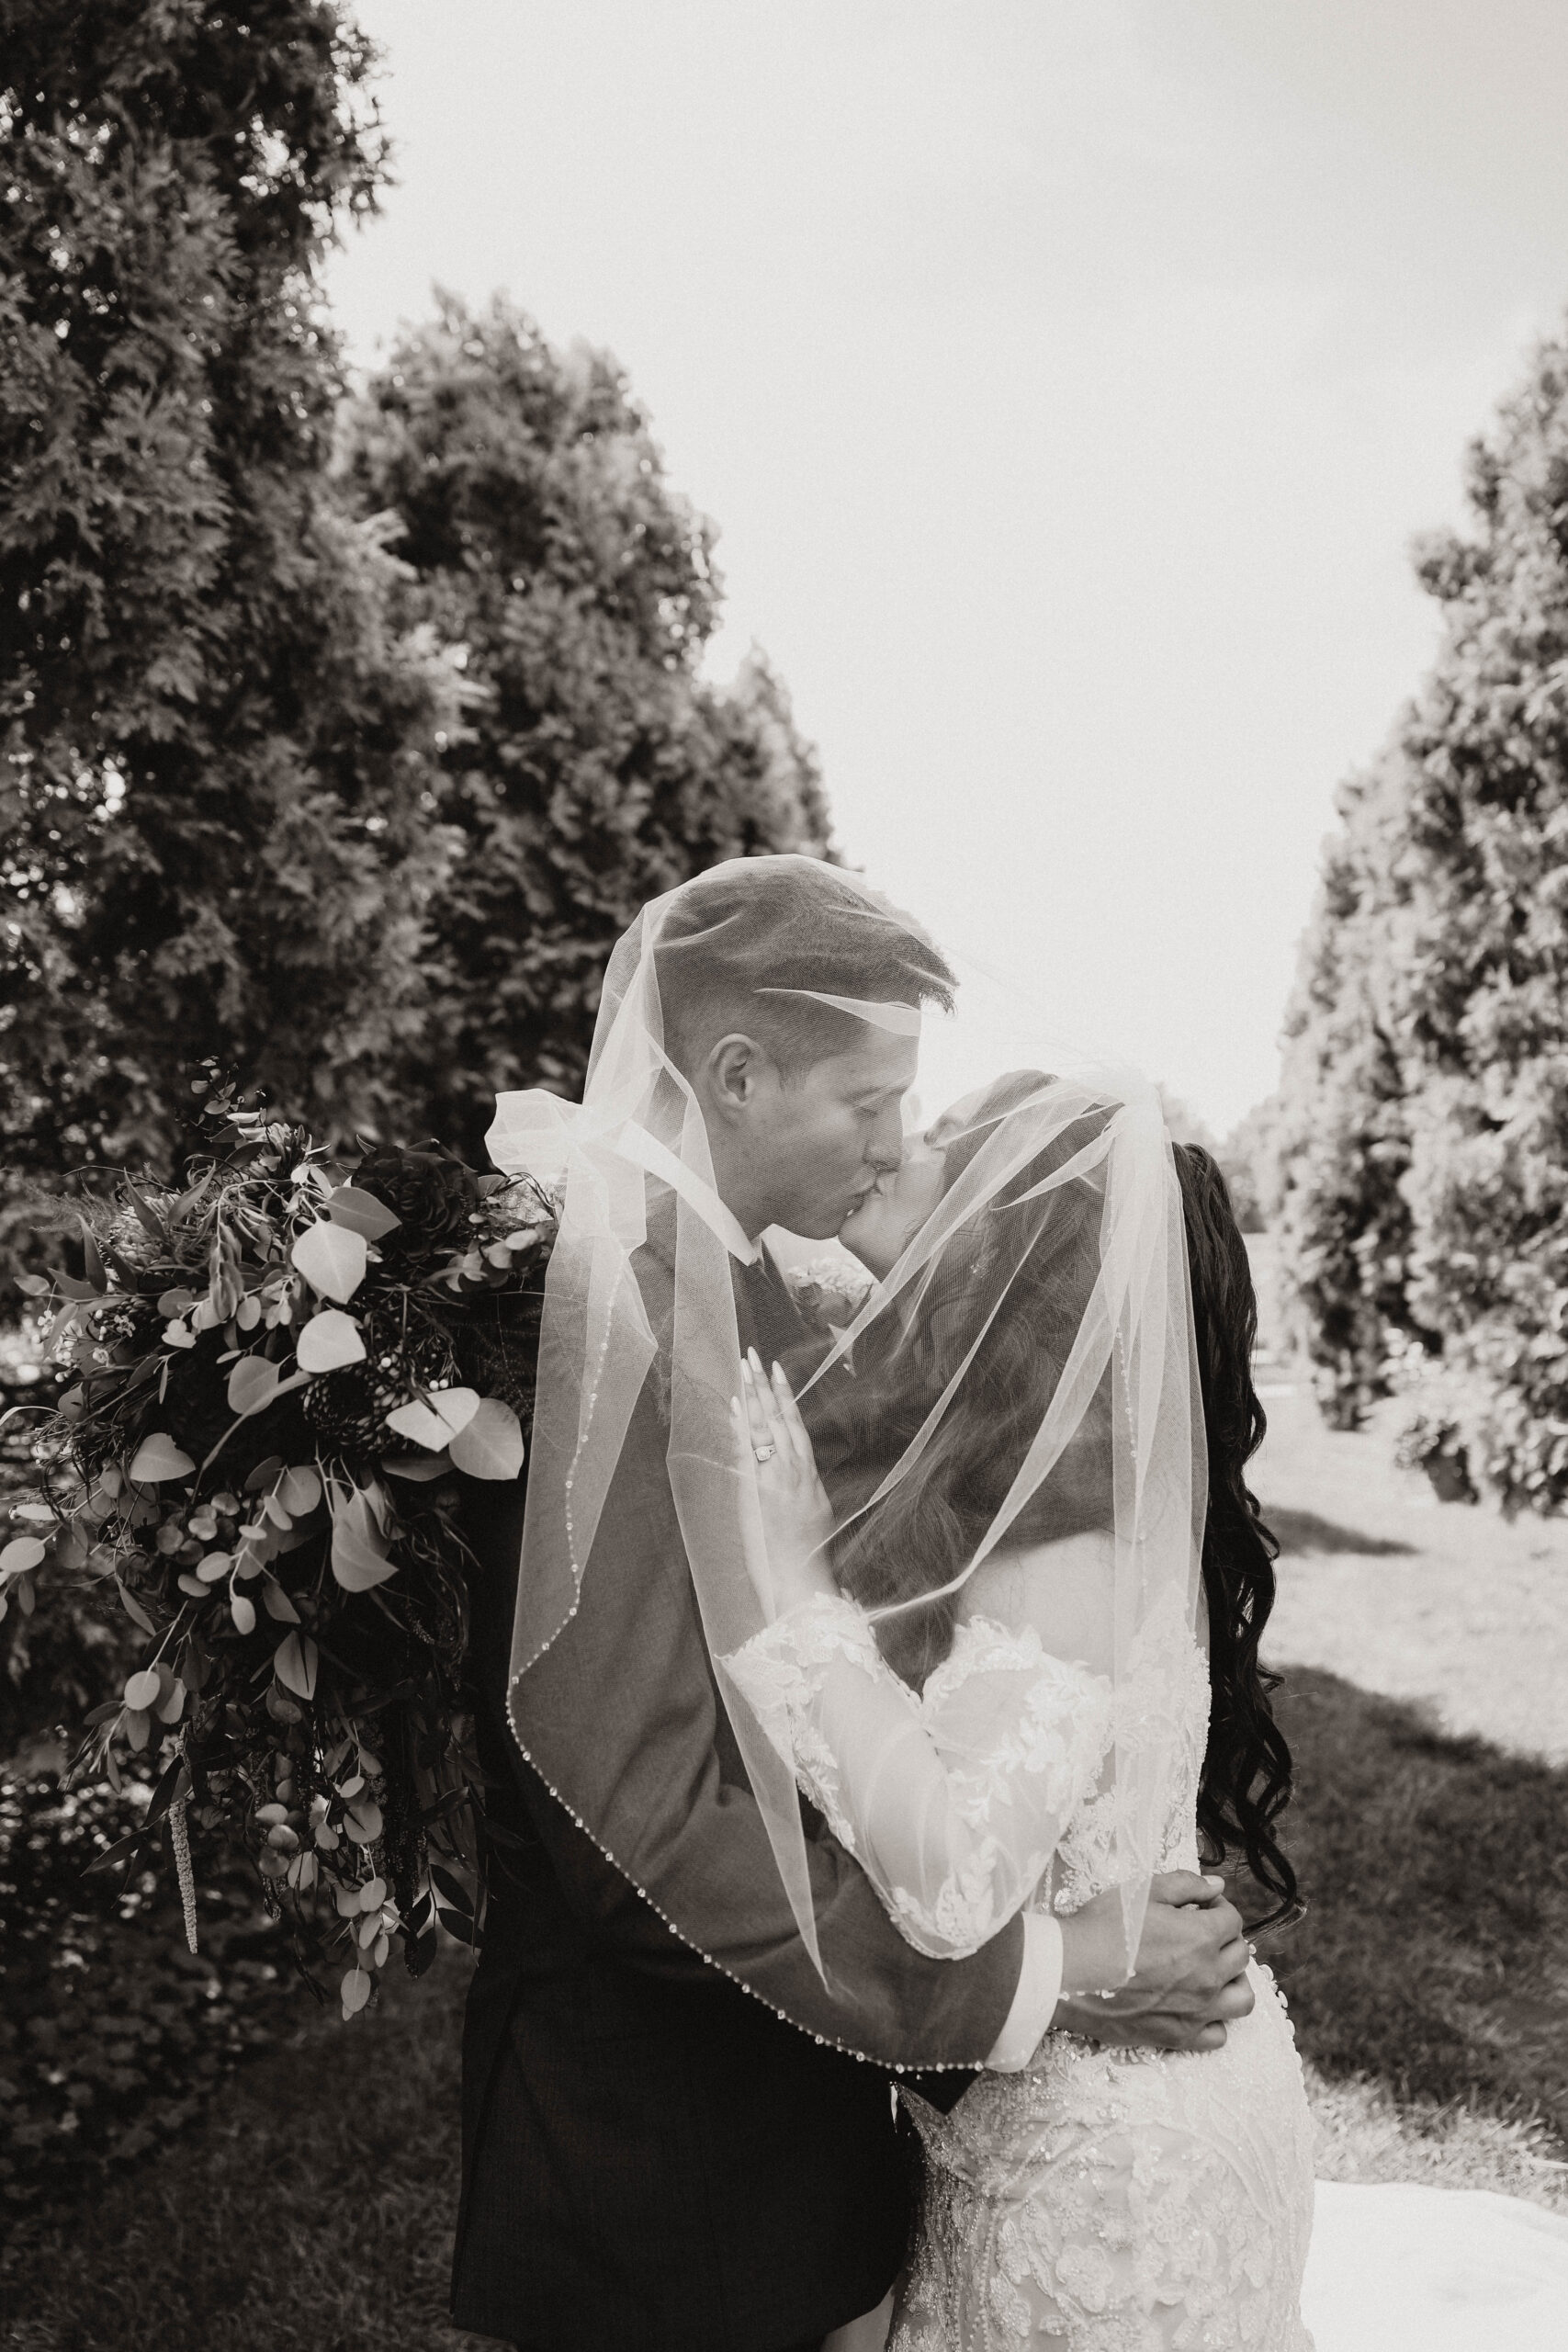 black and white of veil wedding couple portraits at romantic denver botanic gardens